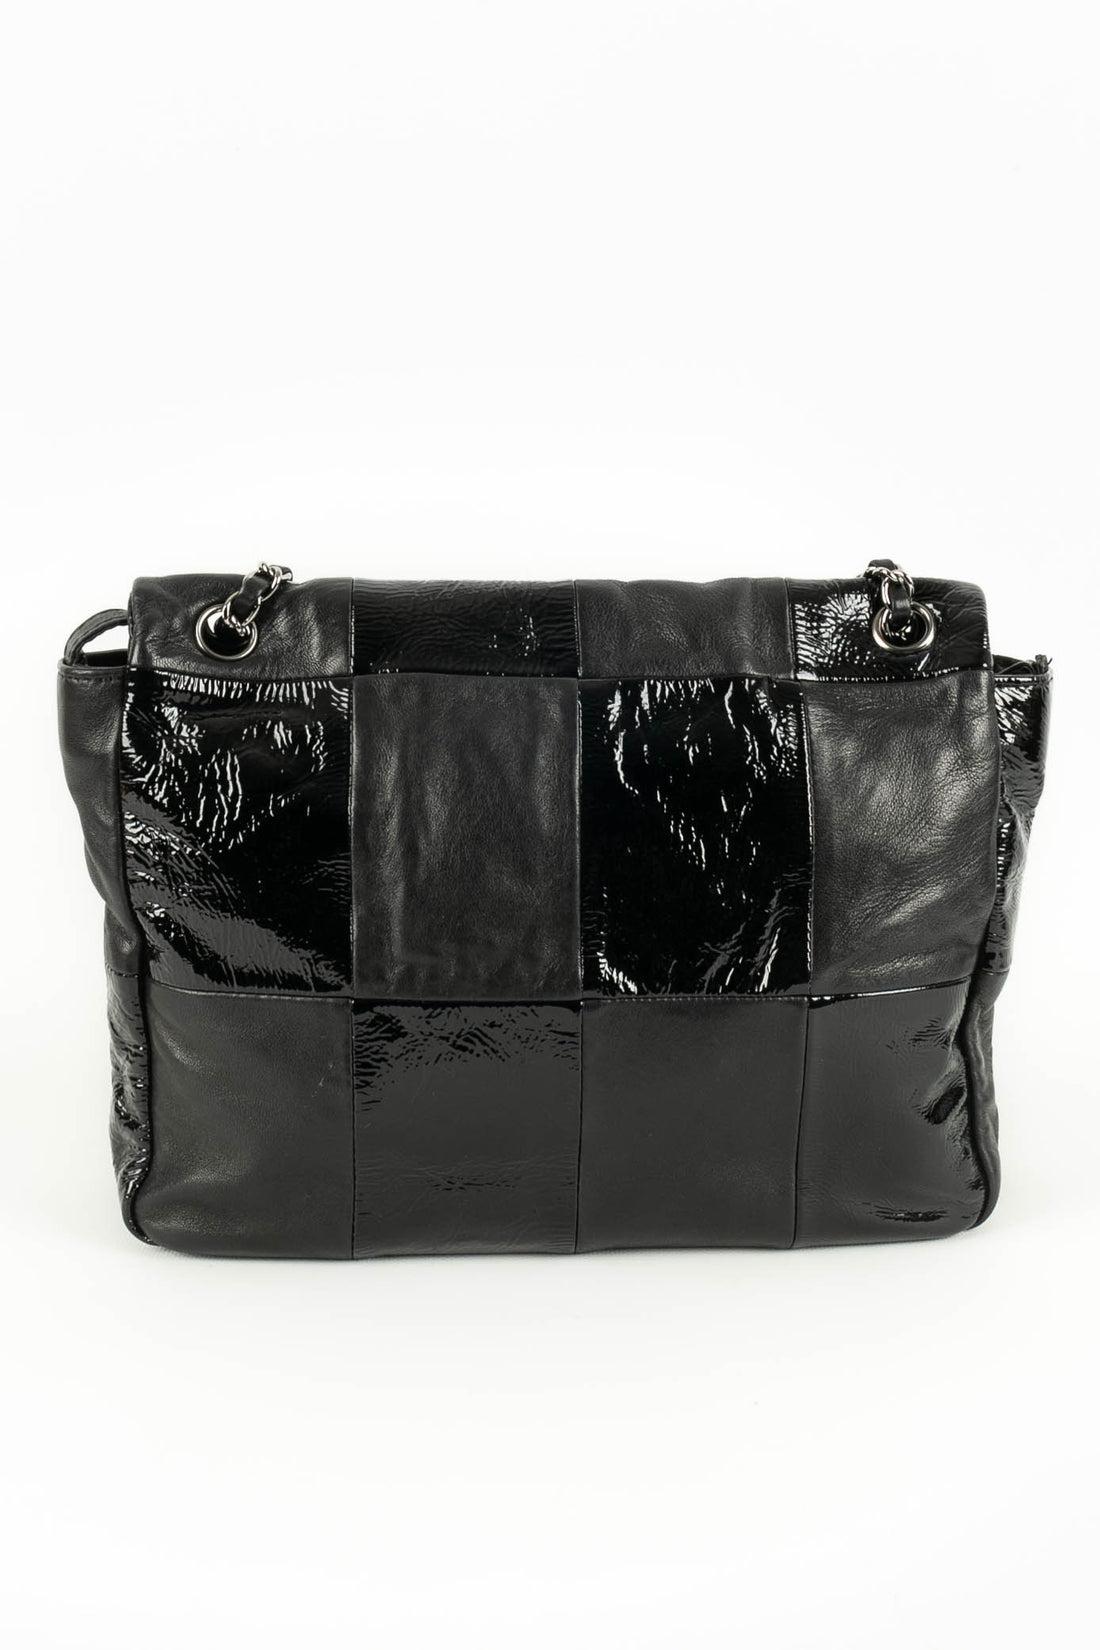 Chanel Black Patent Leather Patchwork Bag, 2006/2007 In Good Condition For Sale In SAINT-OUEN-SUR-SEINE, FR